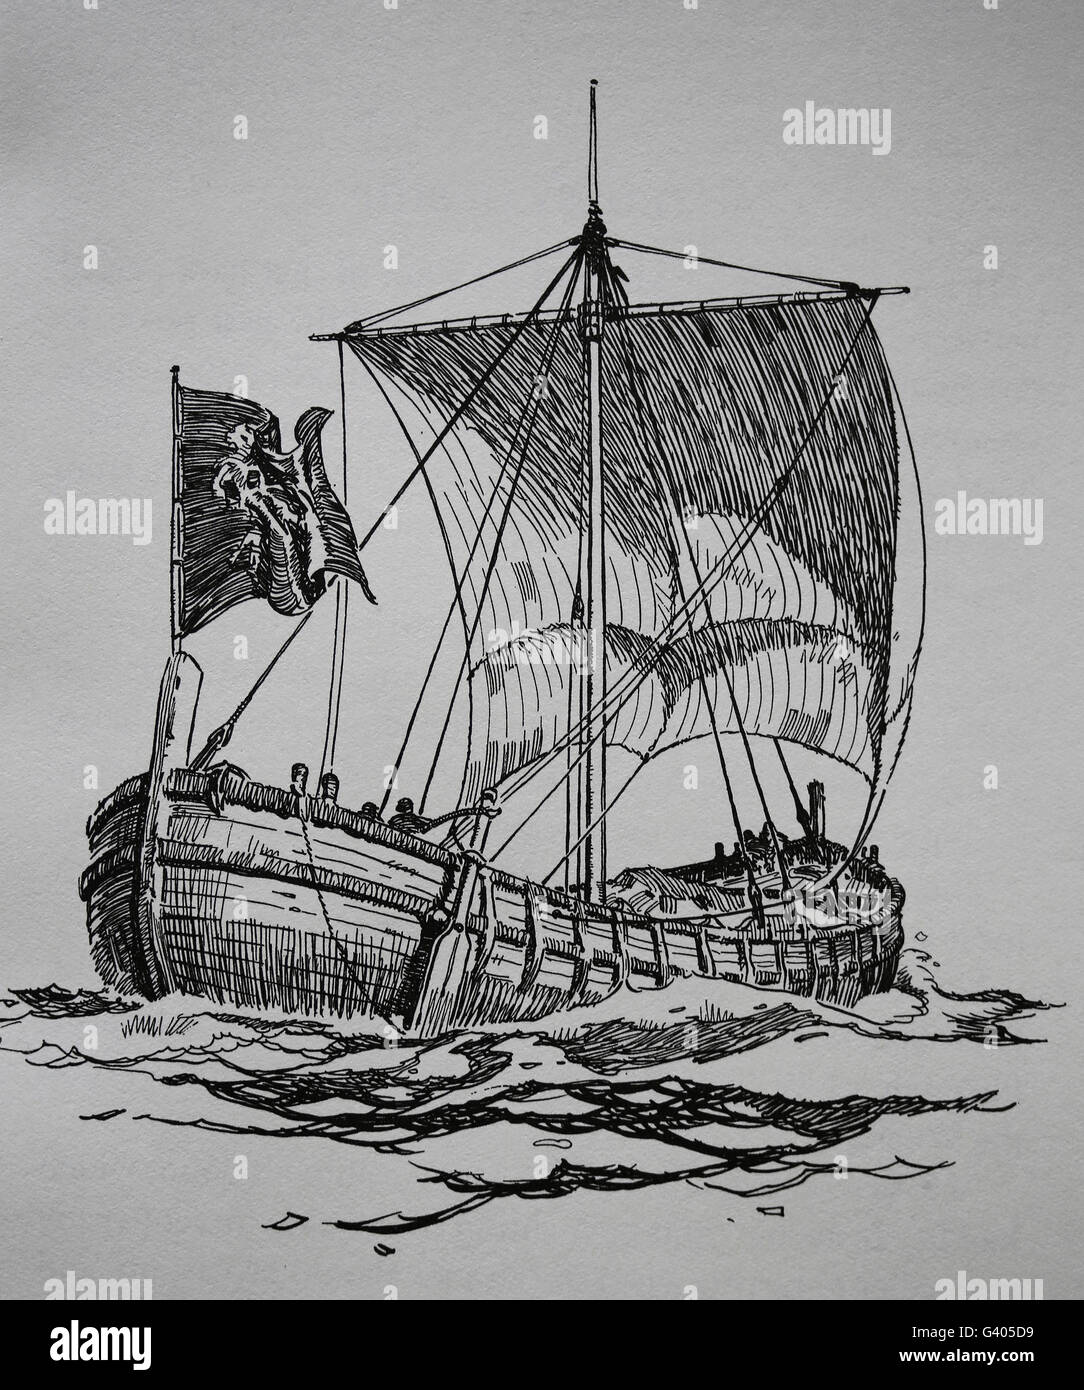 A medieval ship. Engraving, 19th century. Stock Photo